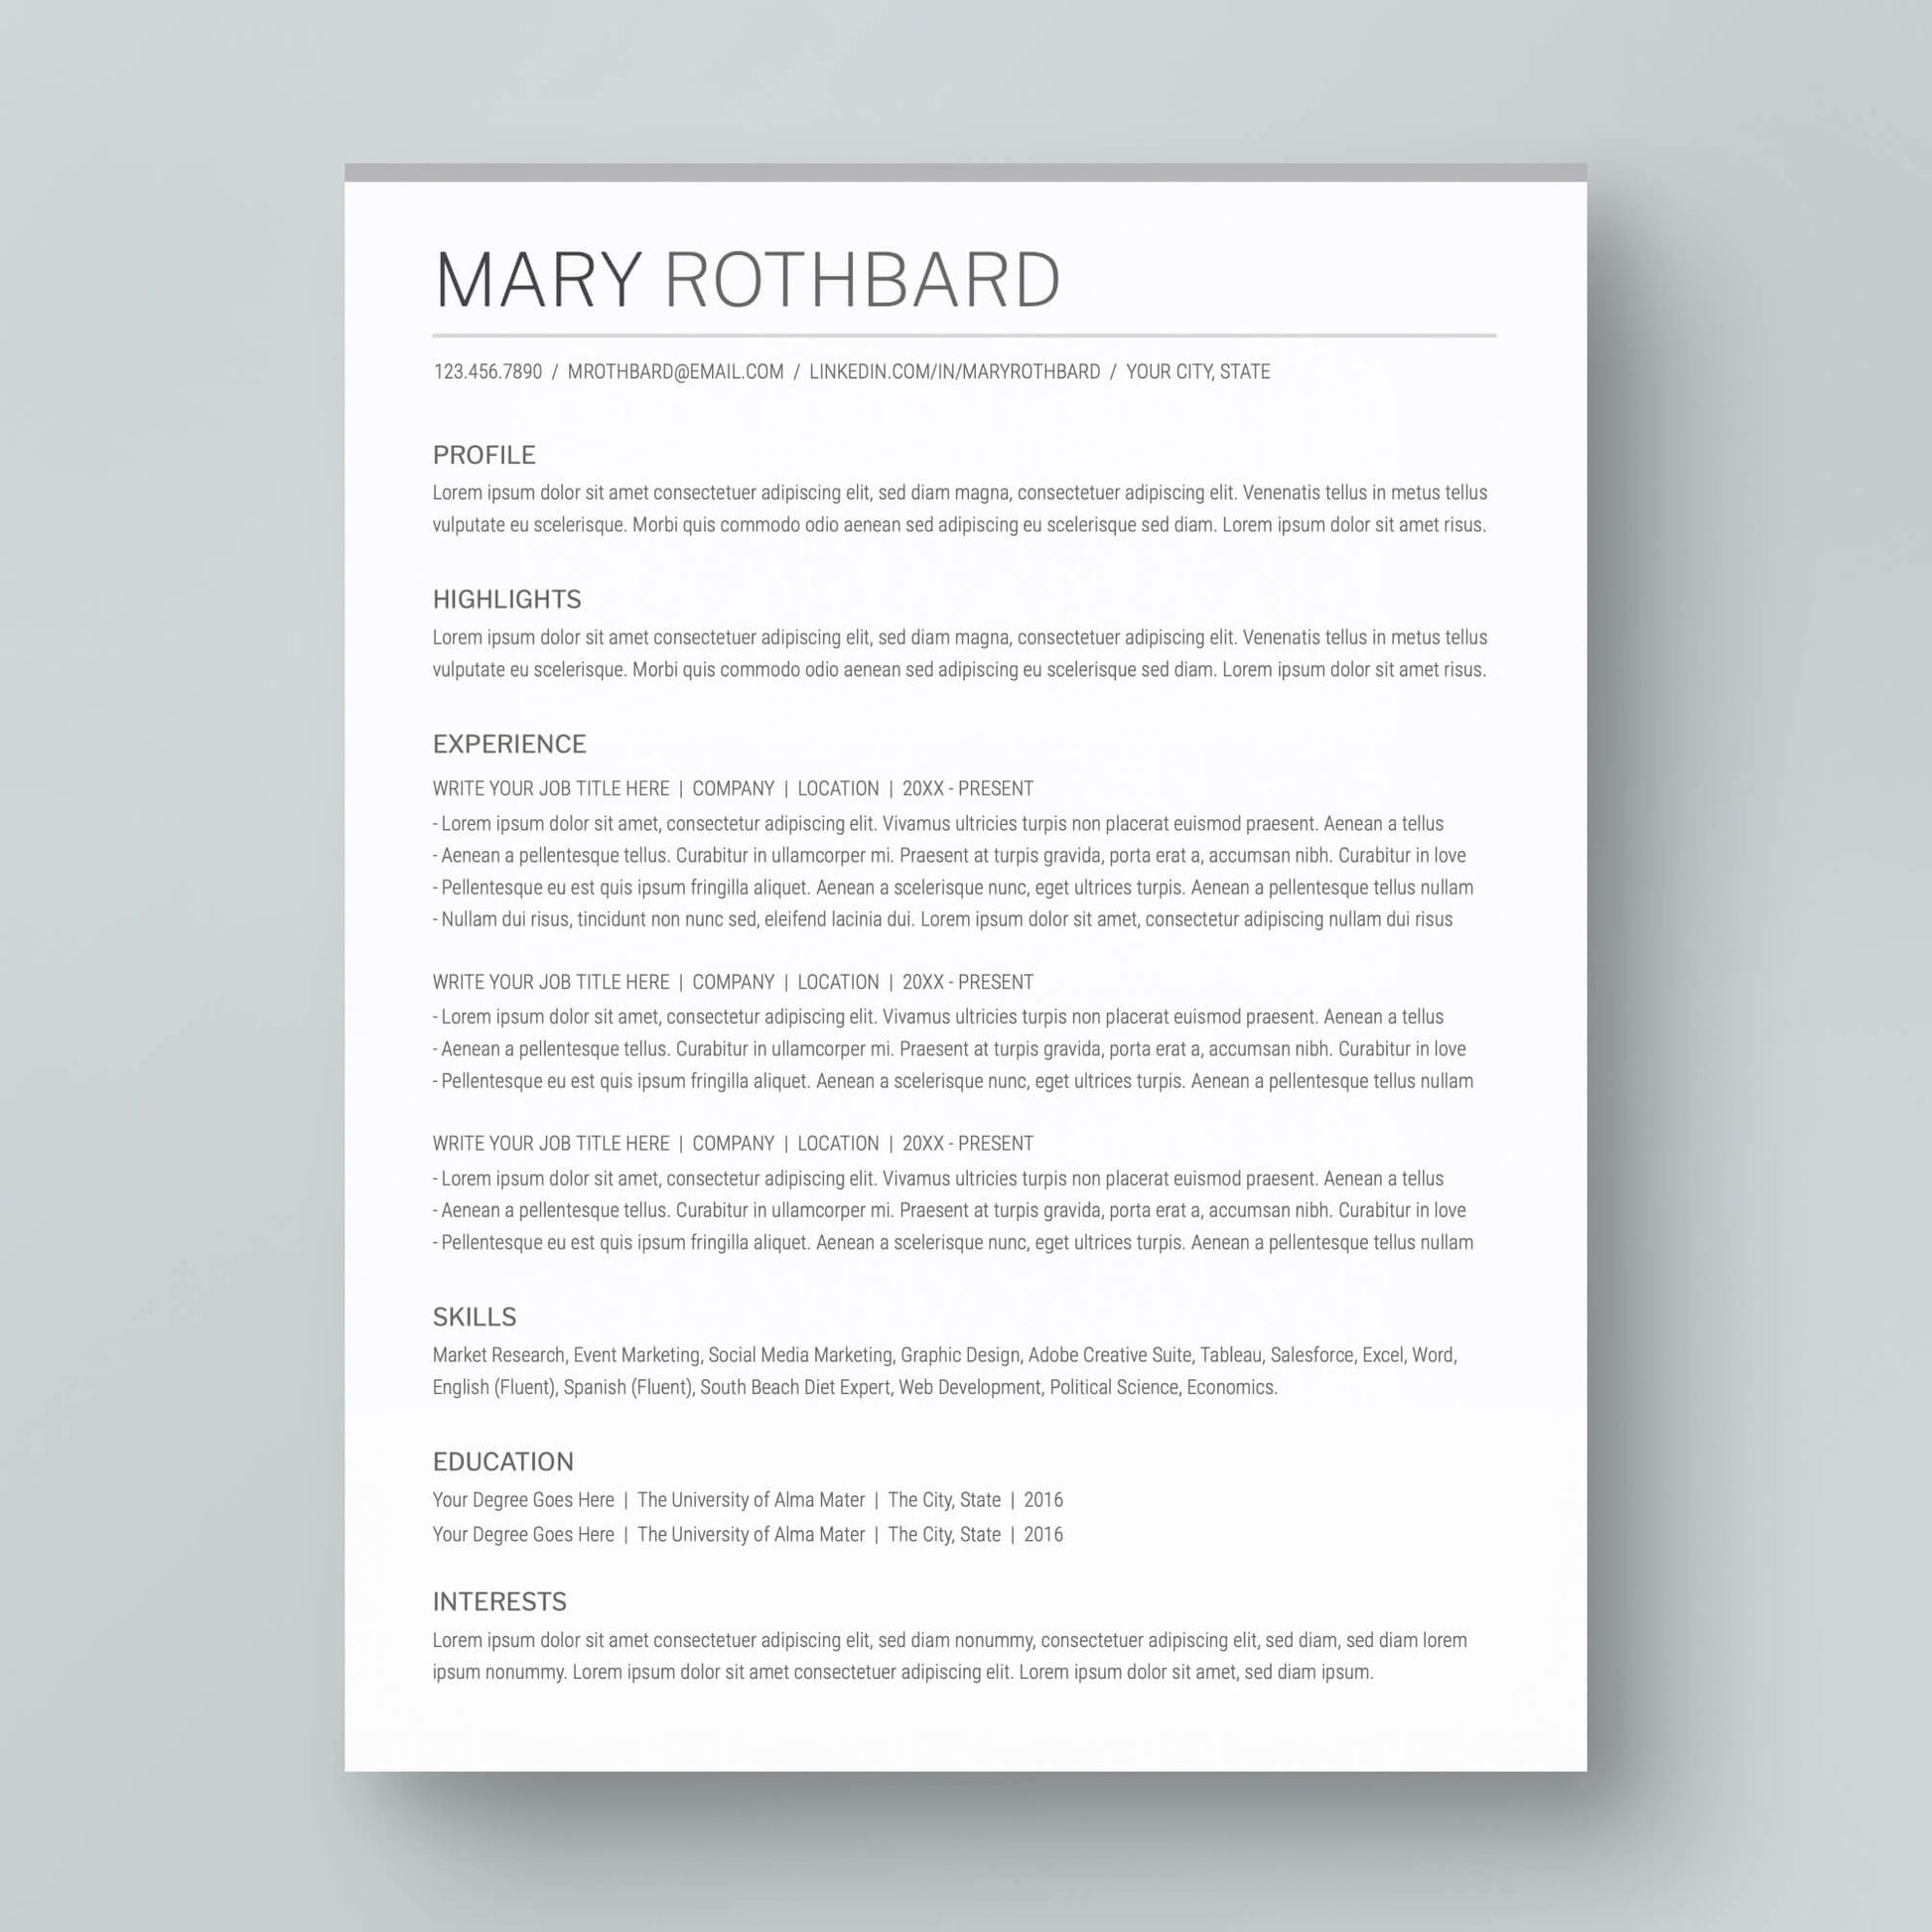 Resume Template: Mary Rothbard - MioDocs